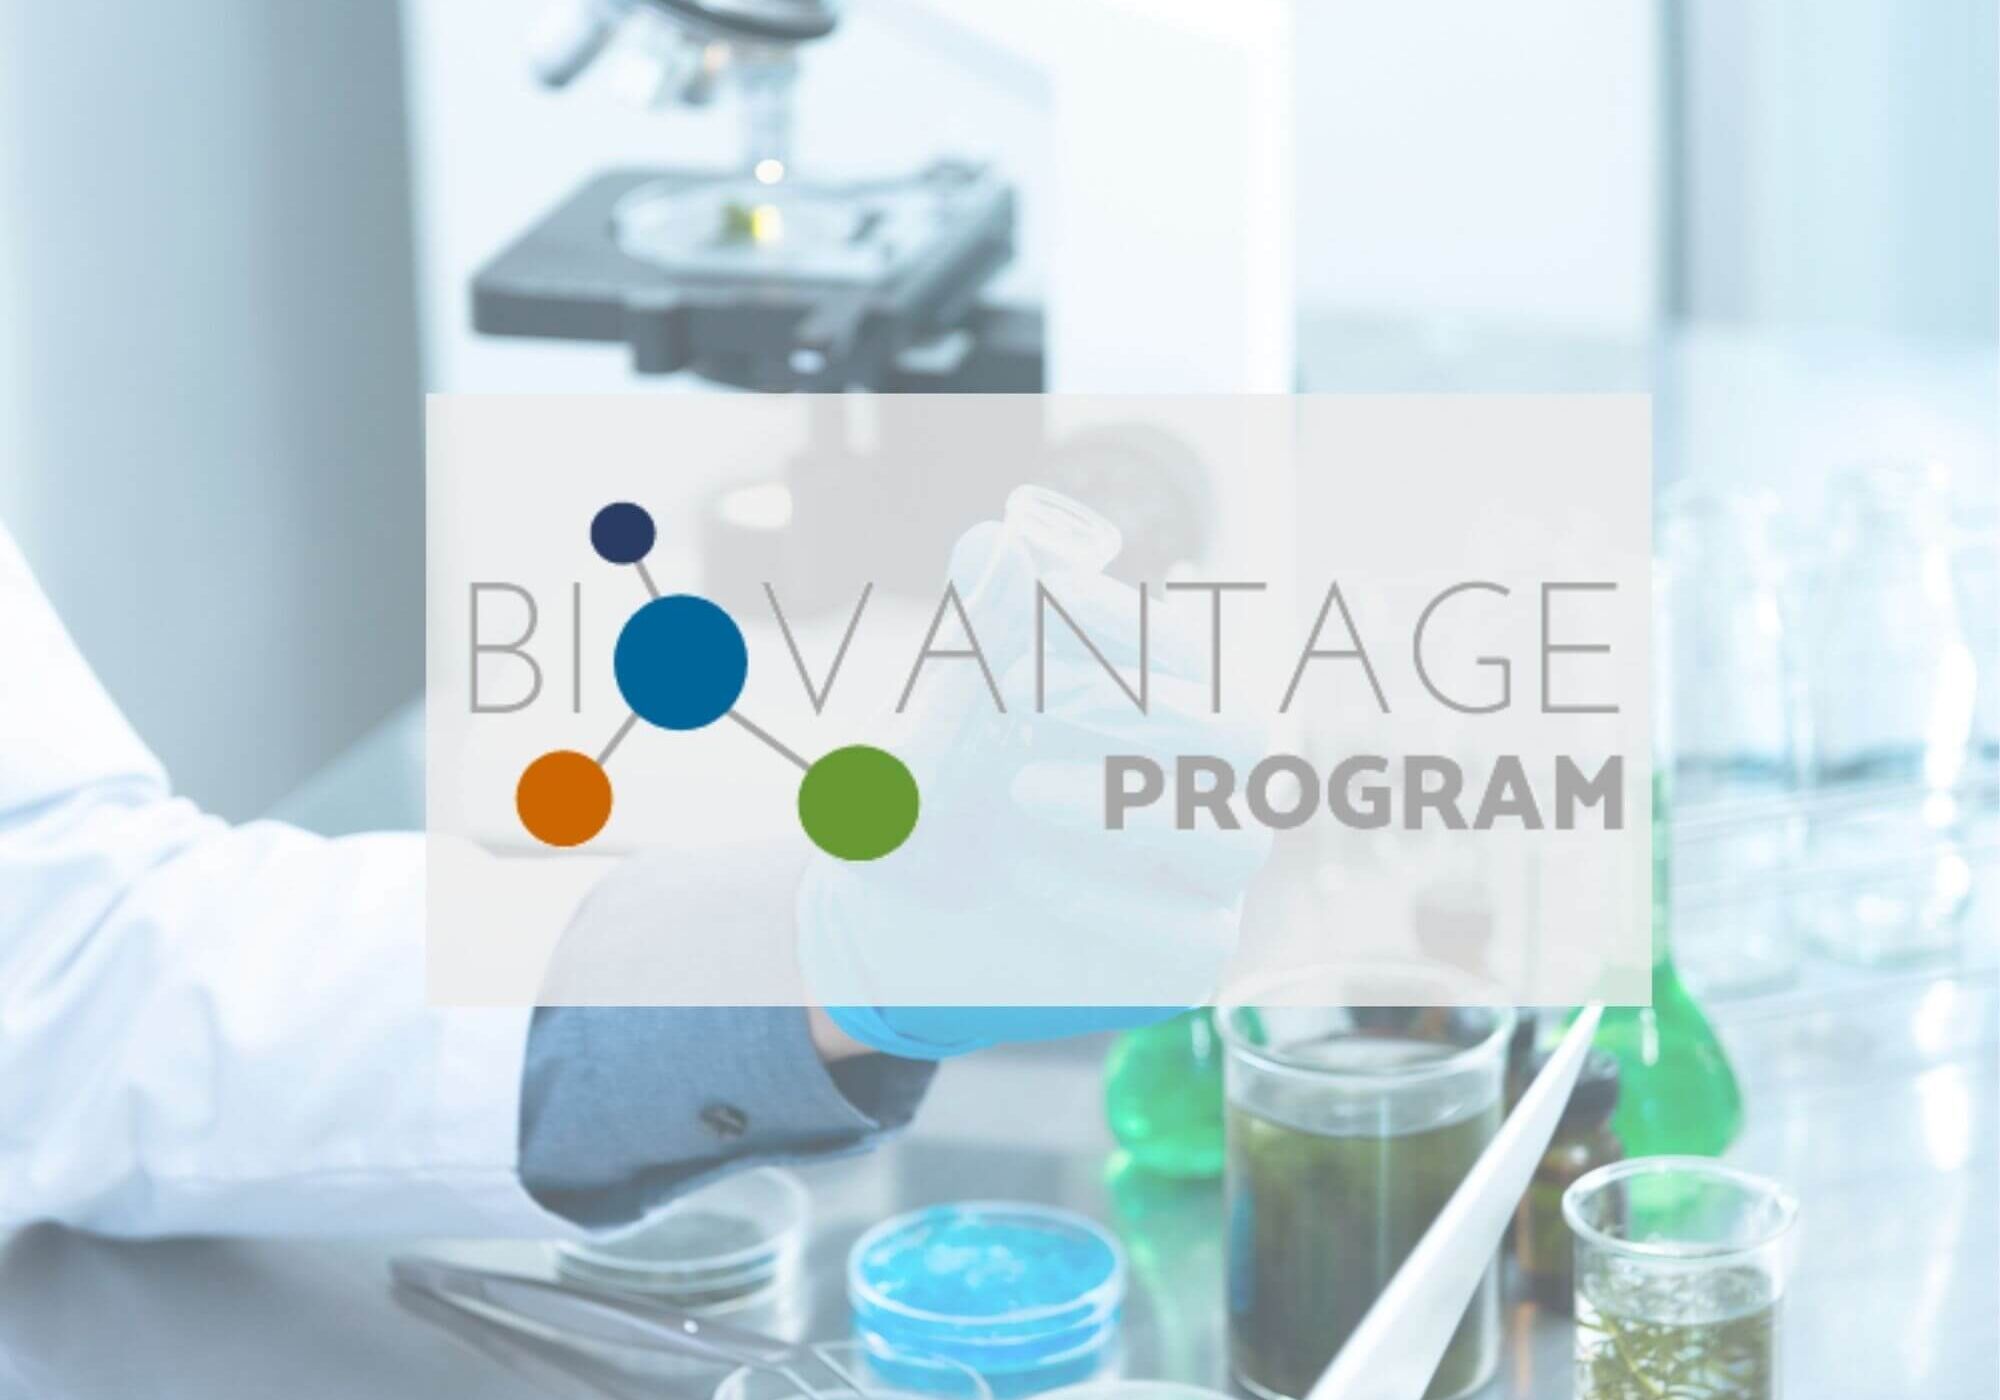 Biovantage Program Learn More section